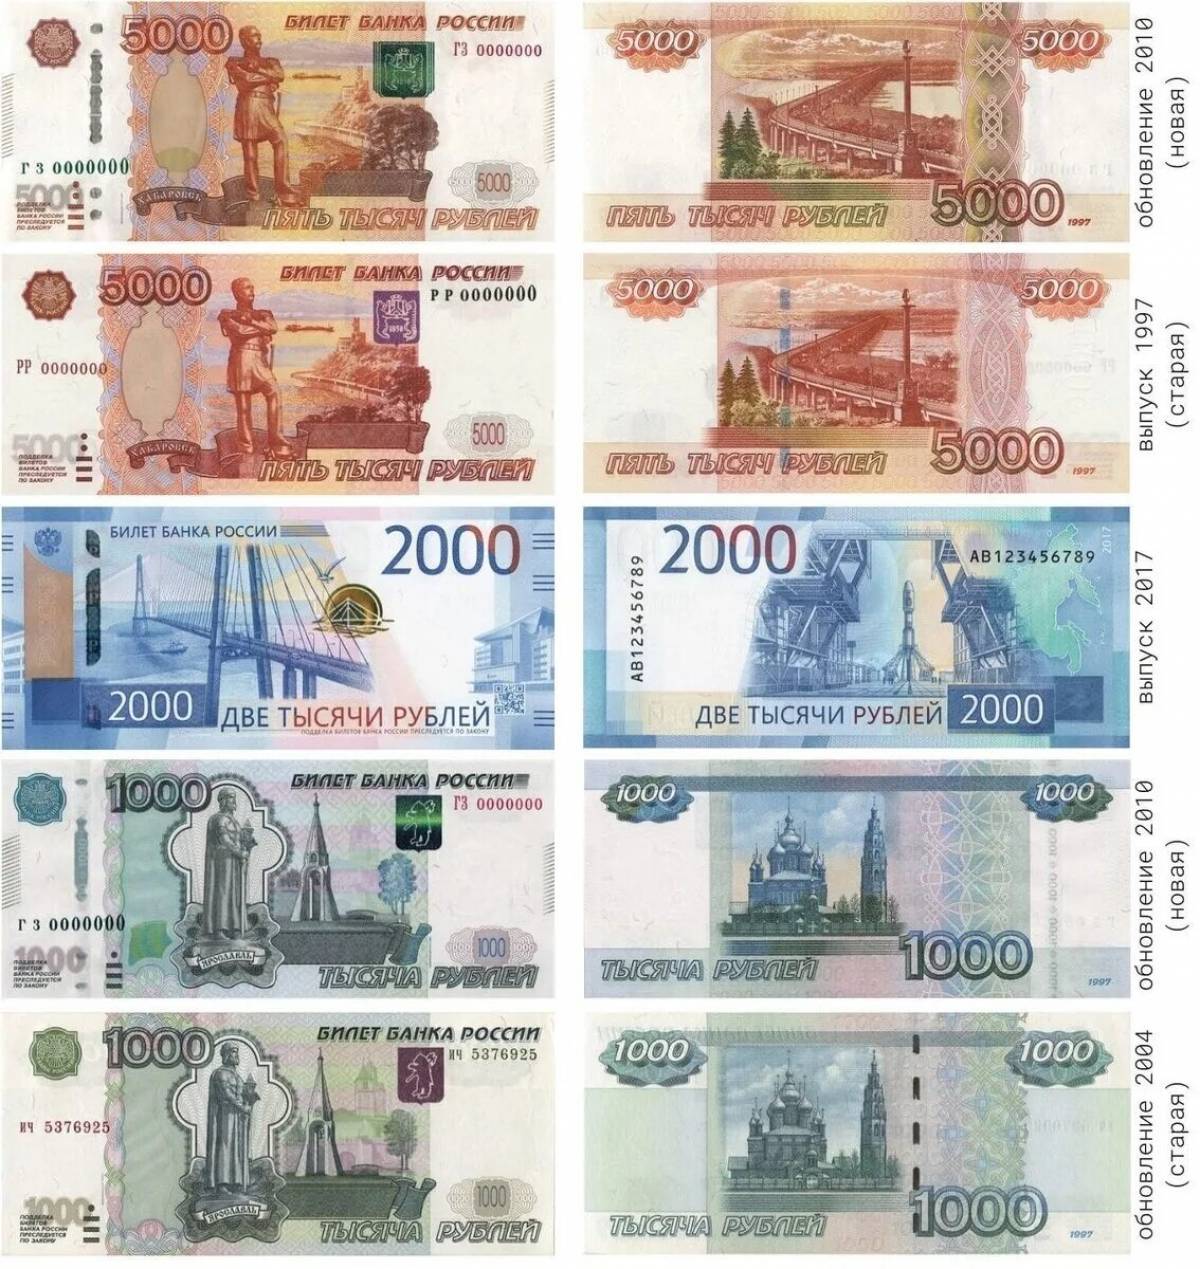 Coloring book comforting Russian money